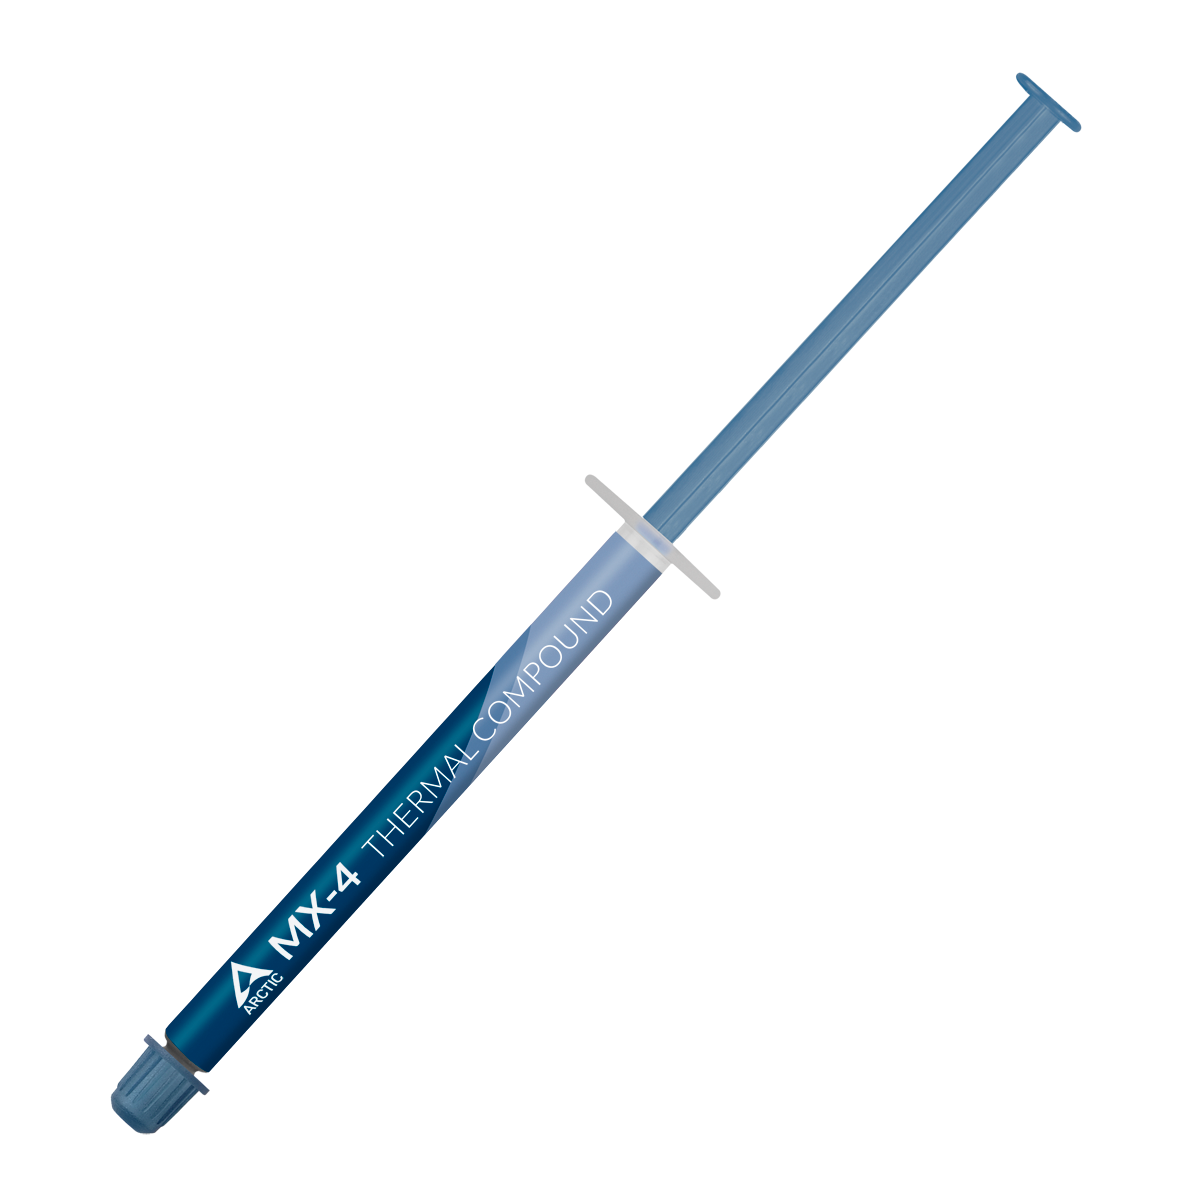  ARCTIC MX-4 (incl. Spatula, 4 g) - Premium